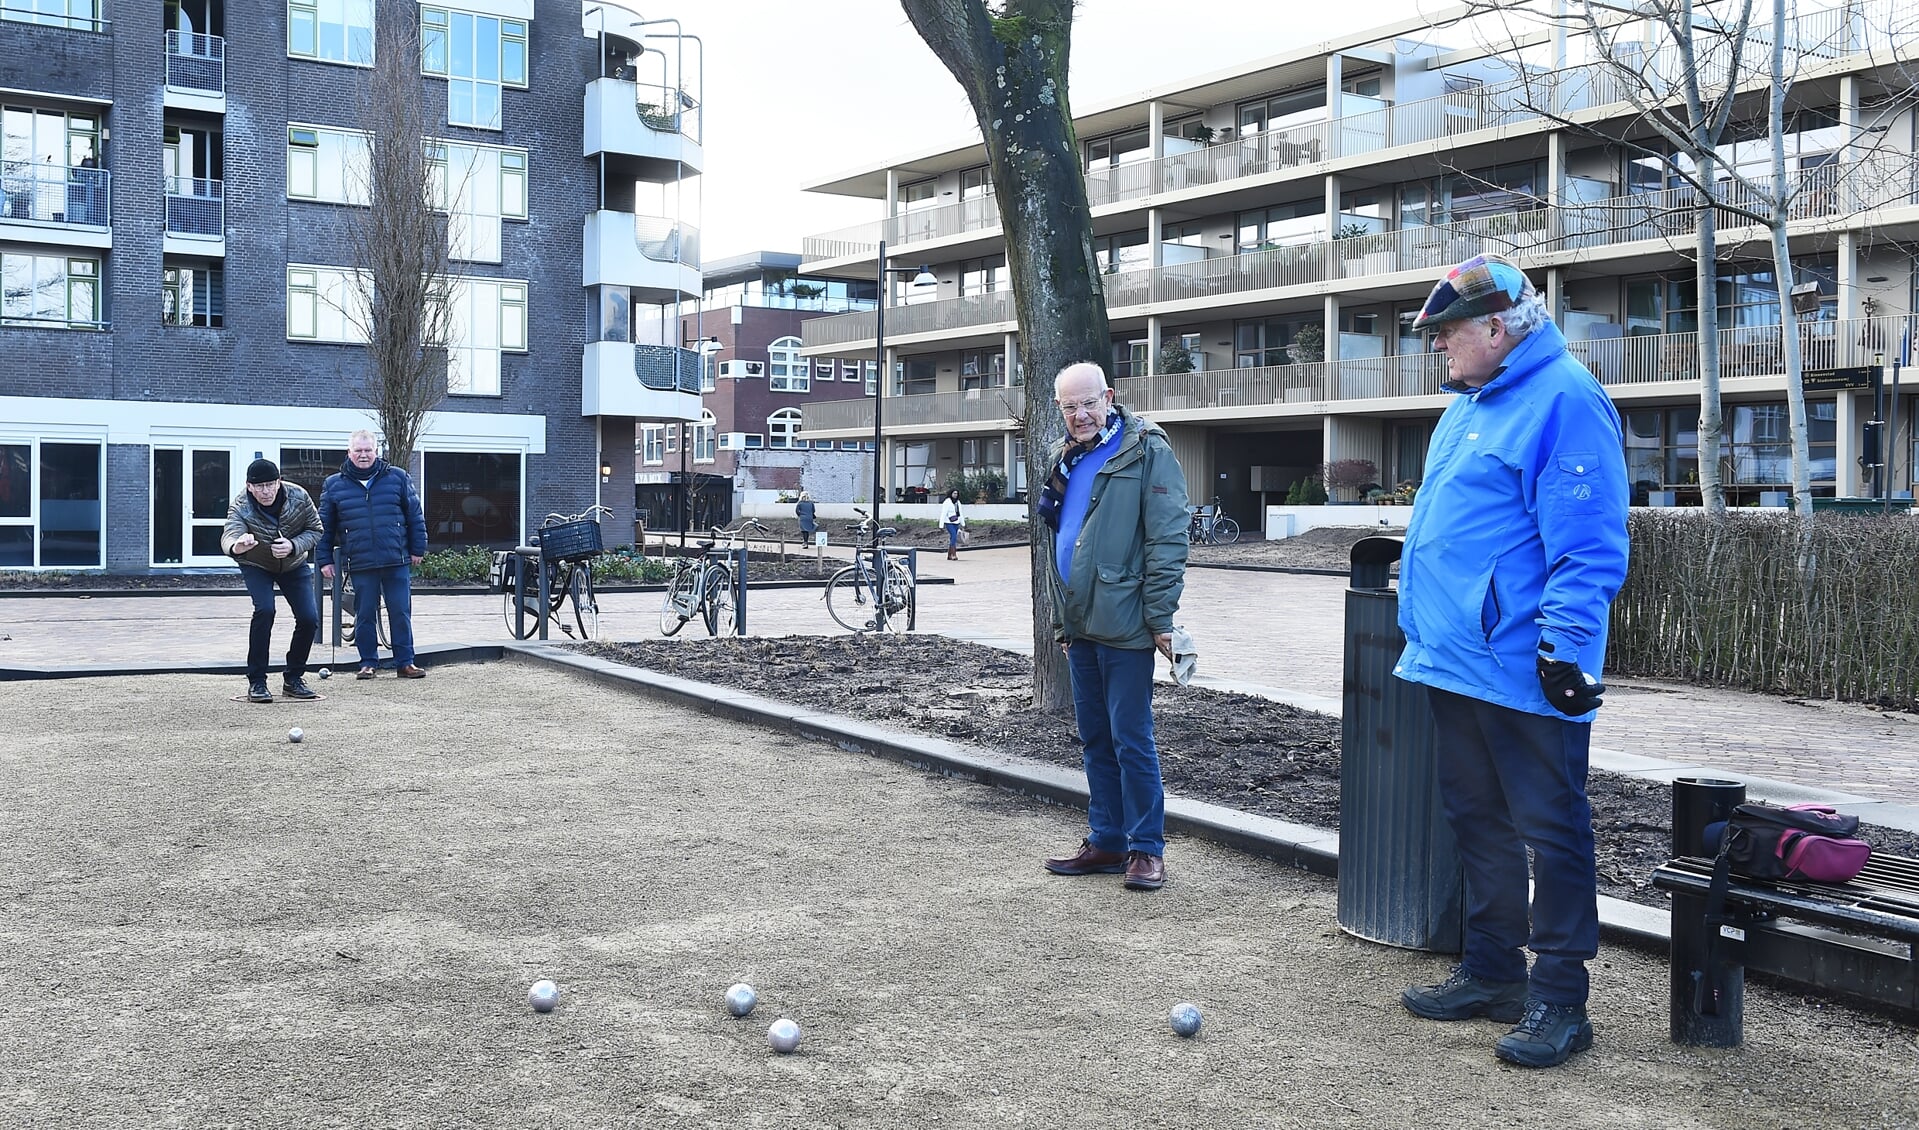 Jeu des boulesbaan op de Veentjes. Rechts Nol Nijhoff, naast hem Jan Schoppenma, Fred Thuis, Roel Riksen. Foto: Roel Kleinpenning